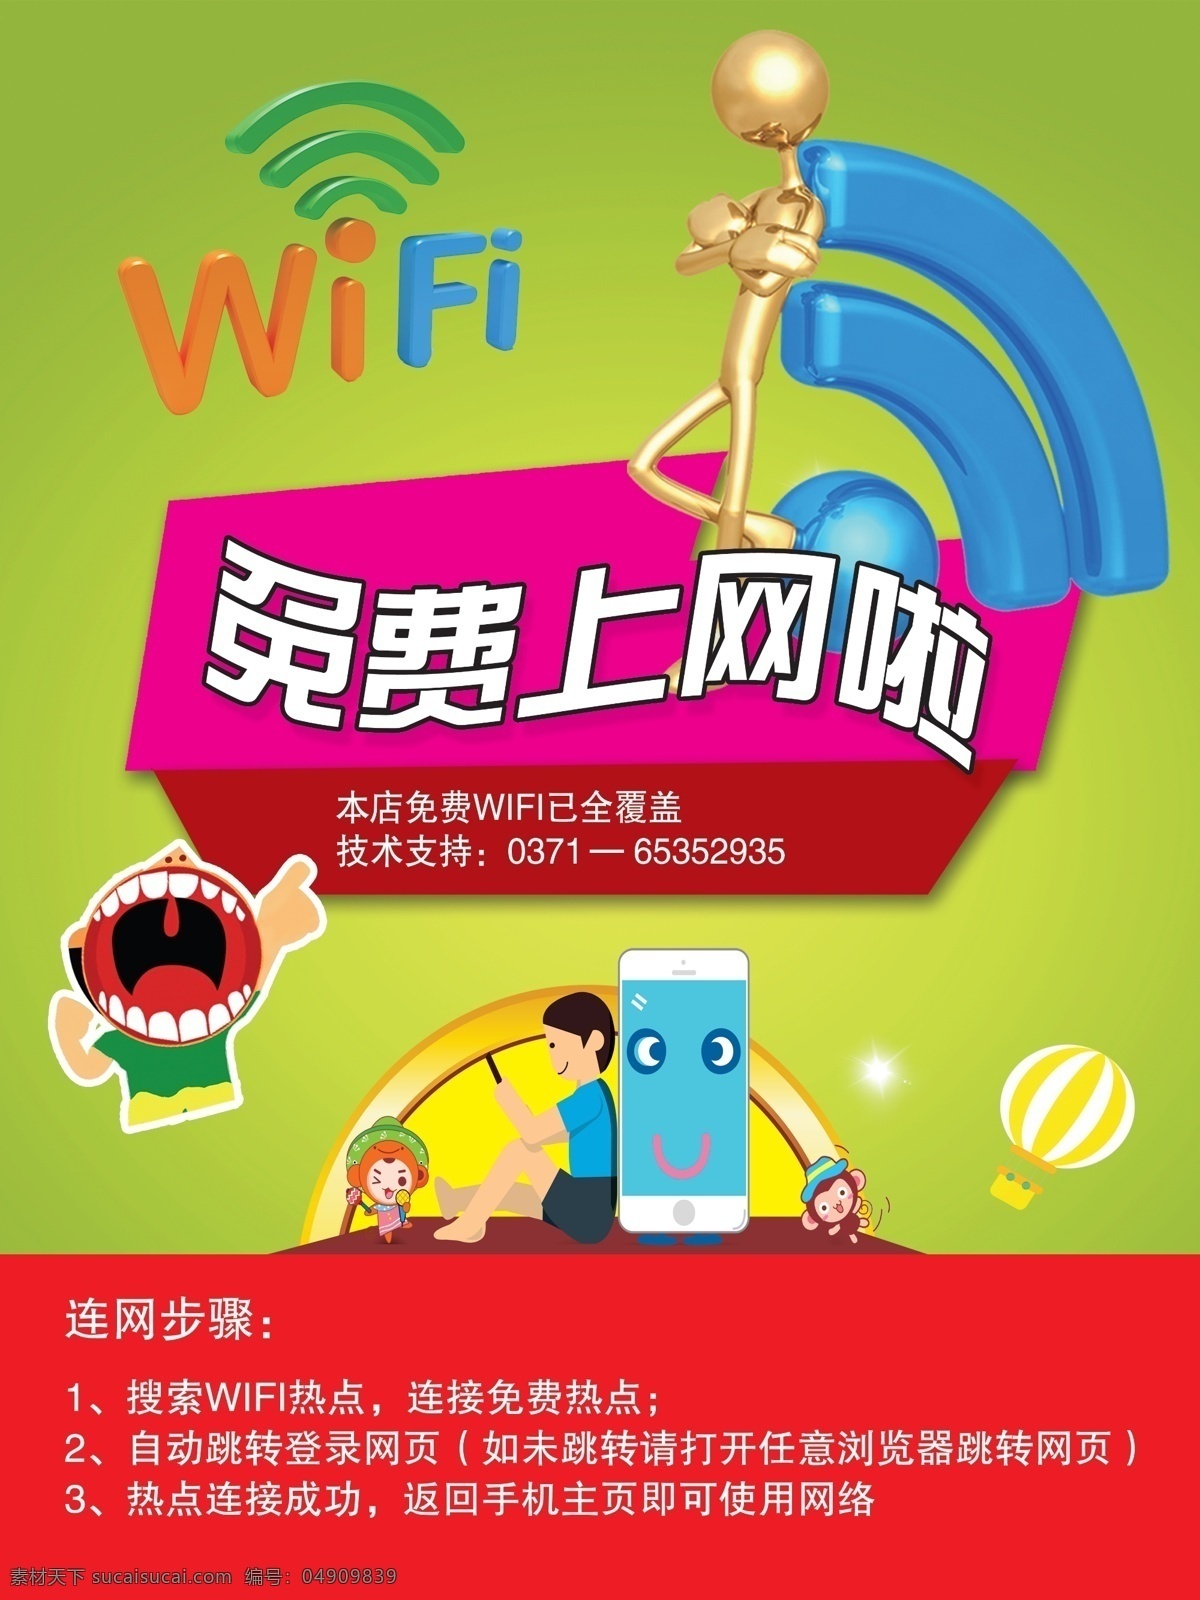 wifi海报 海报 上网步骤 卡通小人 免费上网 绿色背景 上网小人 卡通 无线网 手机 wifi 气球 微信